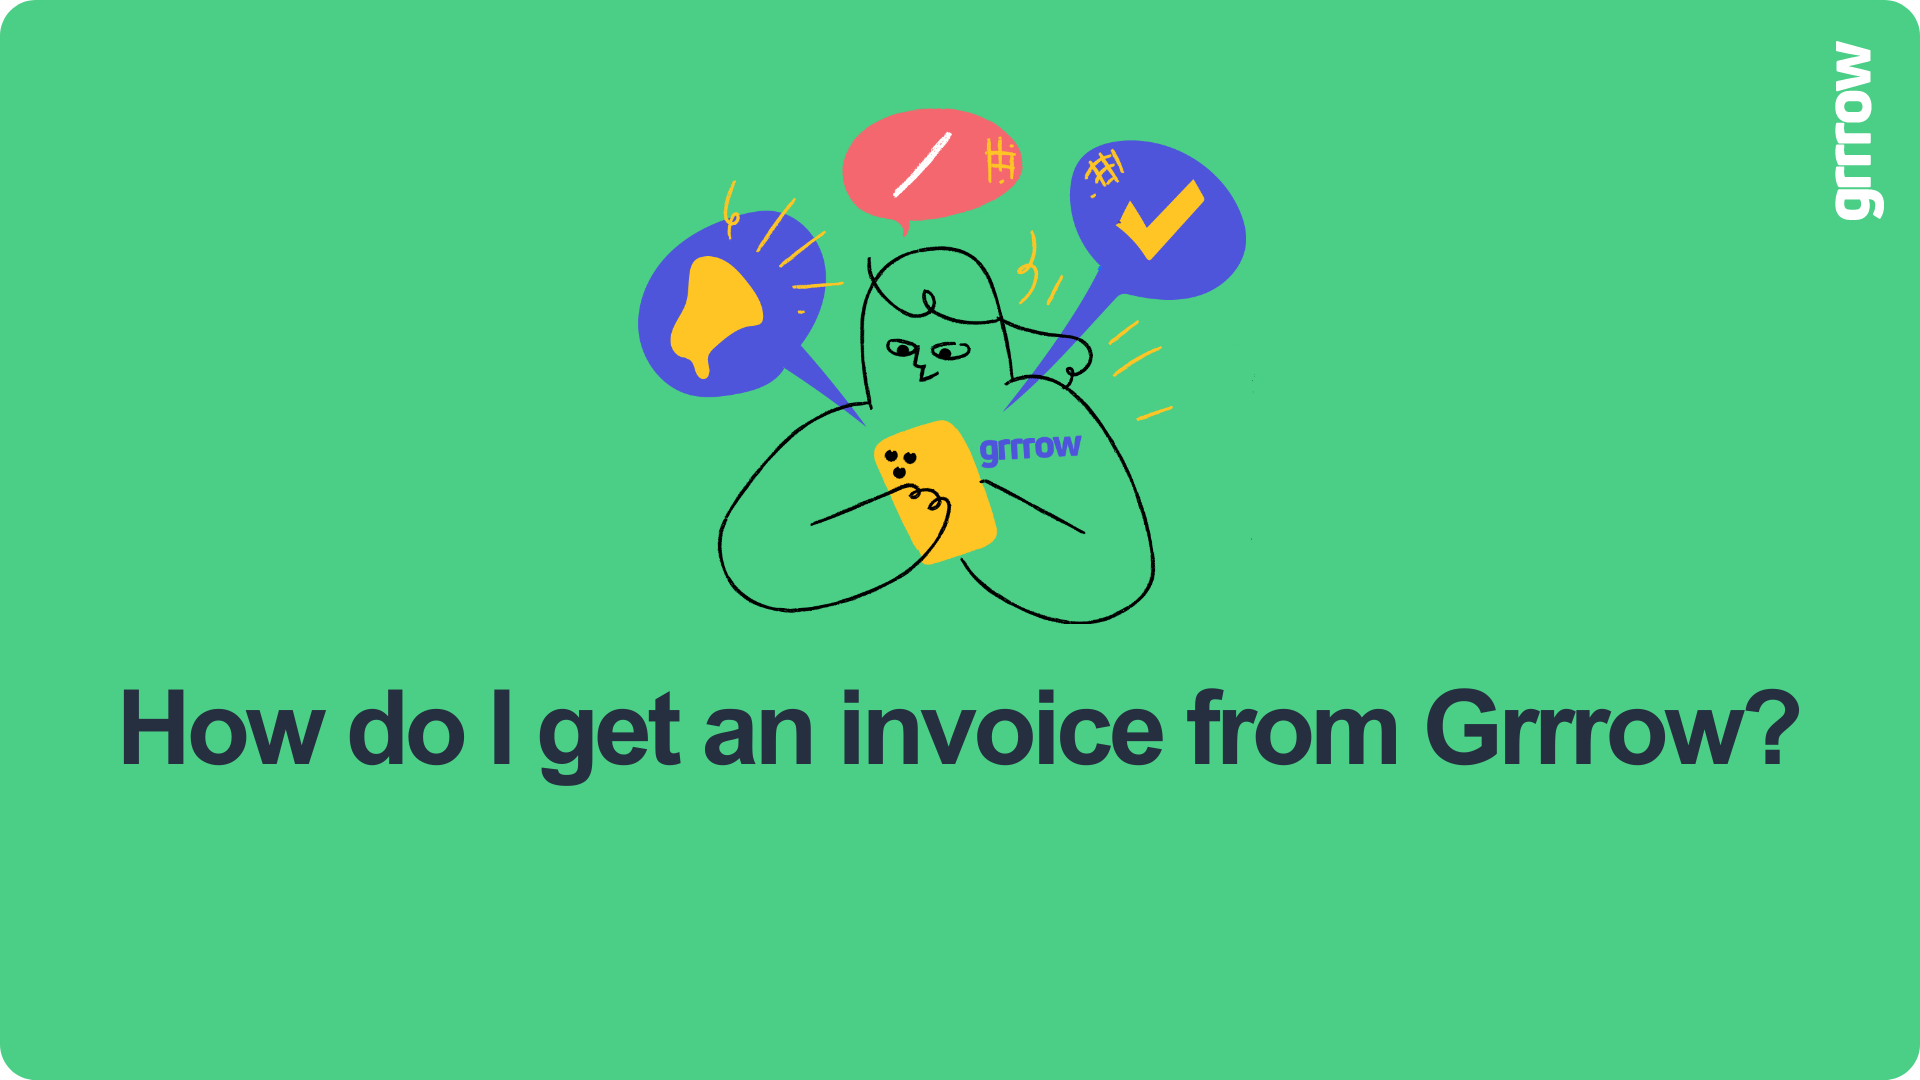 How do I get an invoice from Grrrow?